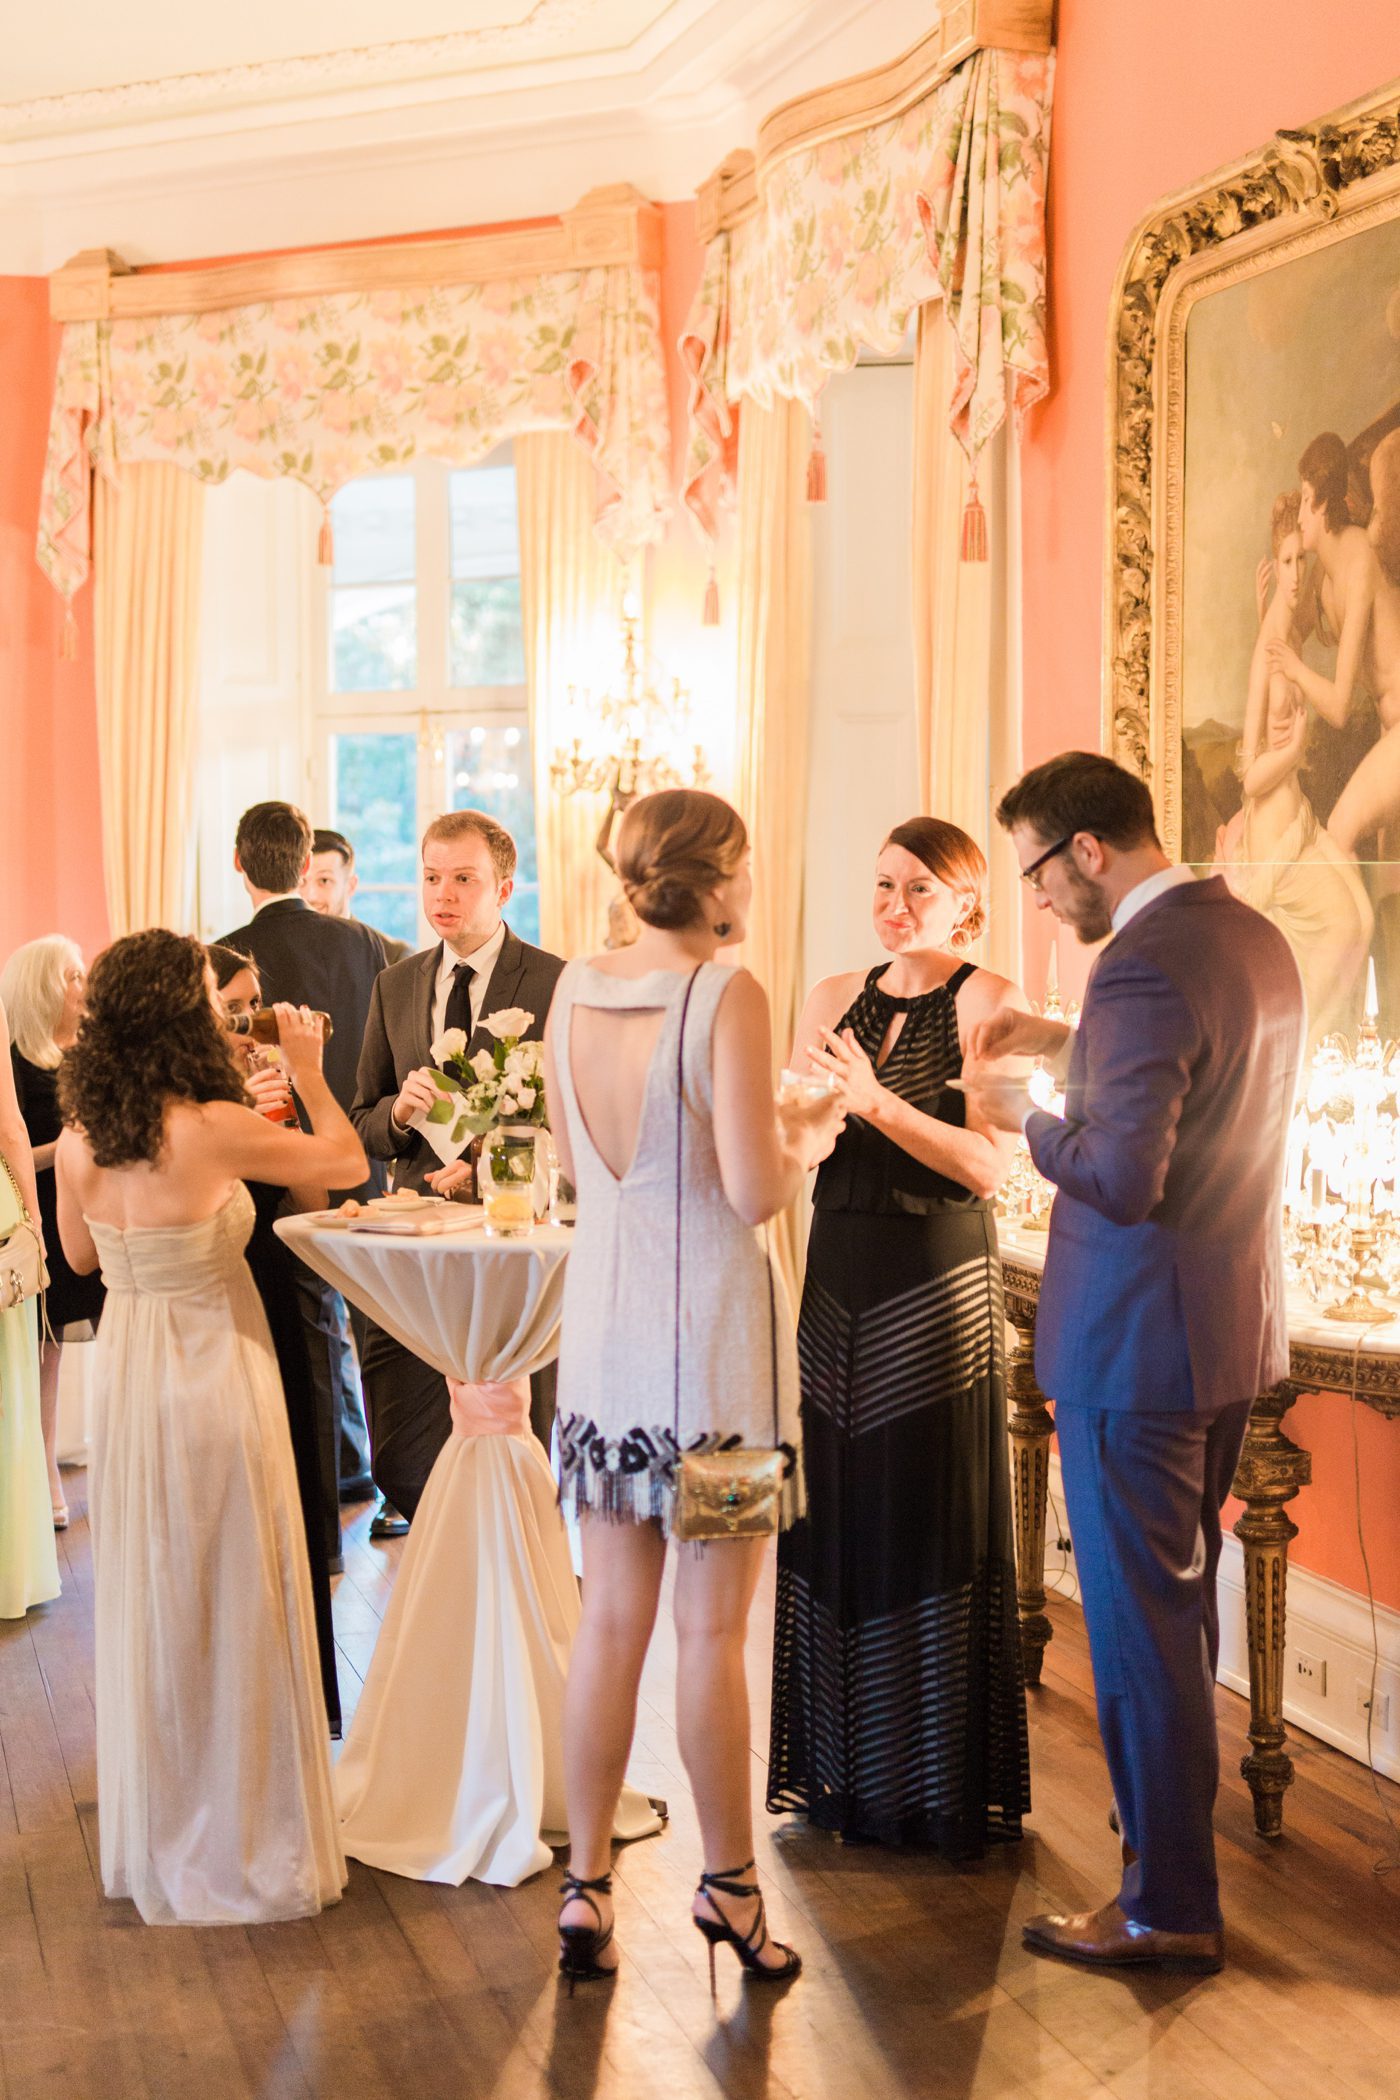 William Aiken House reception in the red room | Elegant William Aiken House Wedding Photos | Charleston SC wedding photographers Catherine Ann Photography